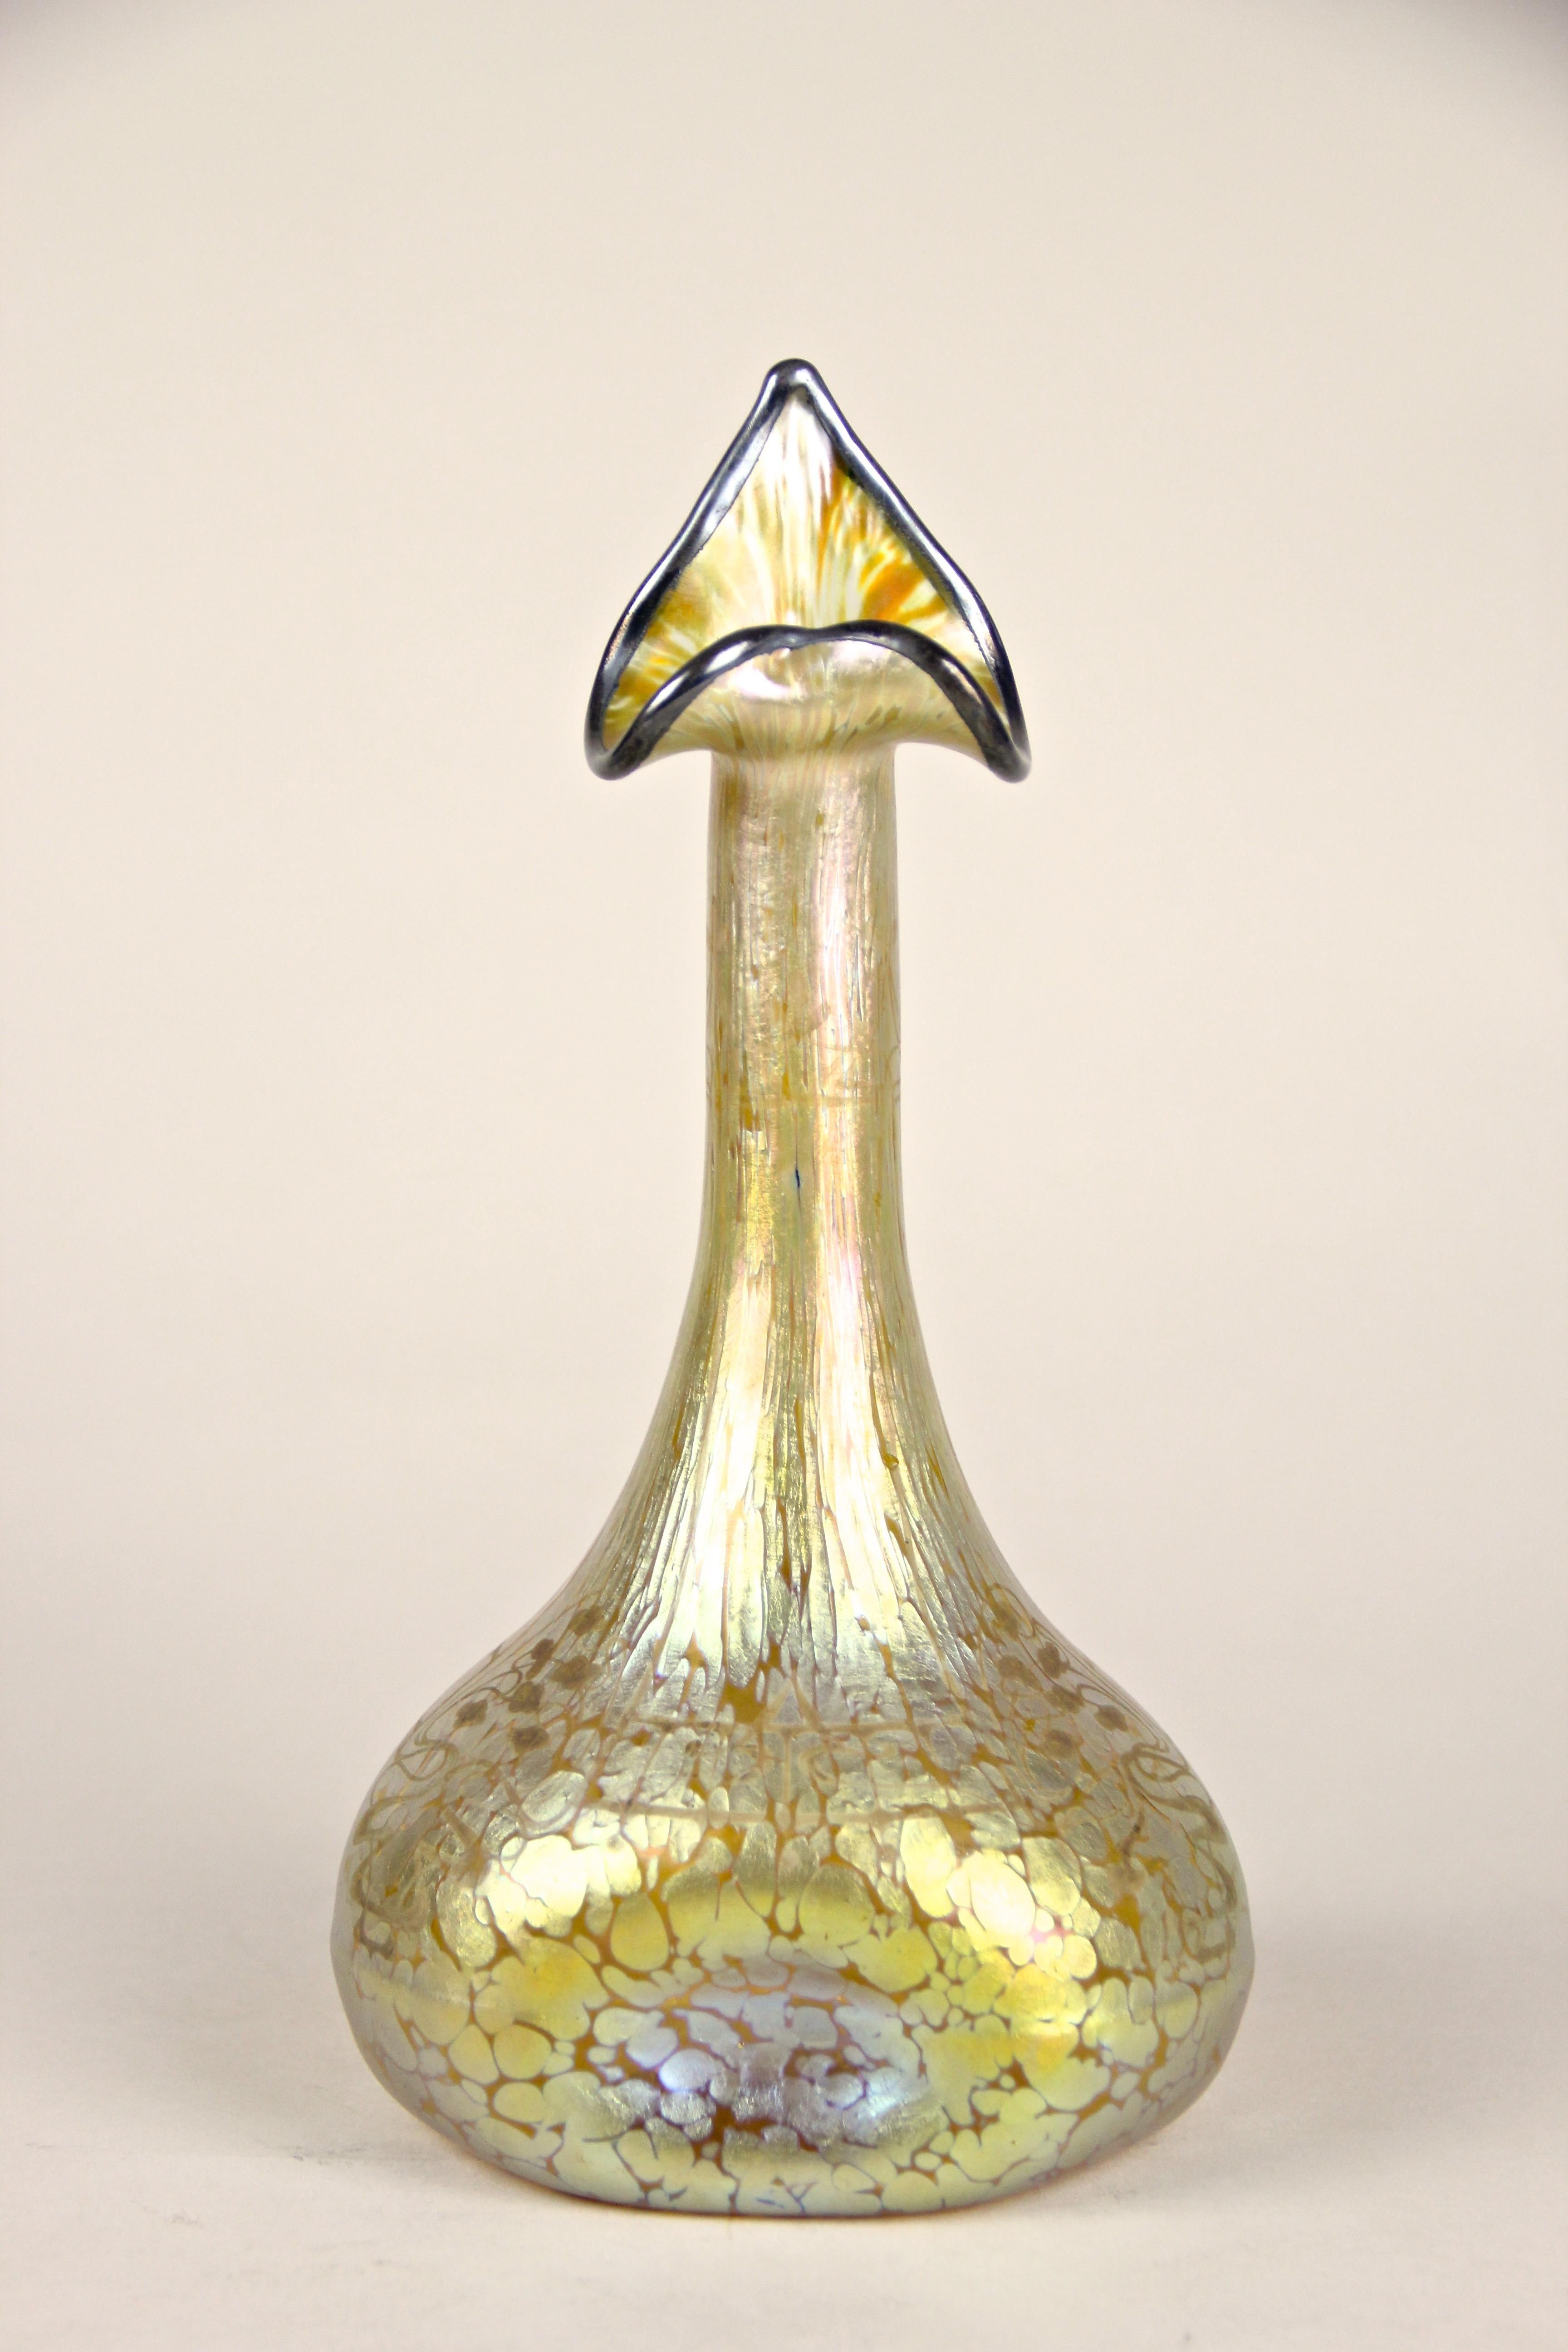 Stunning Loetz Witwe glass vase decor 